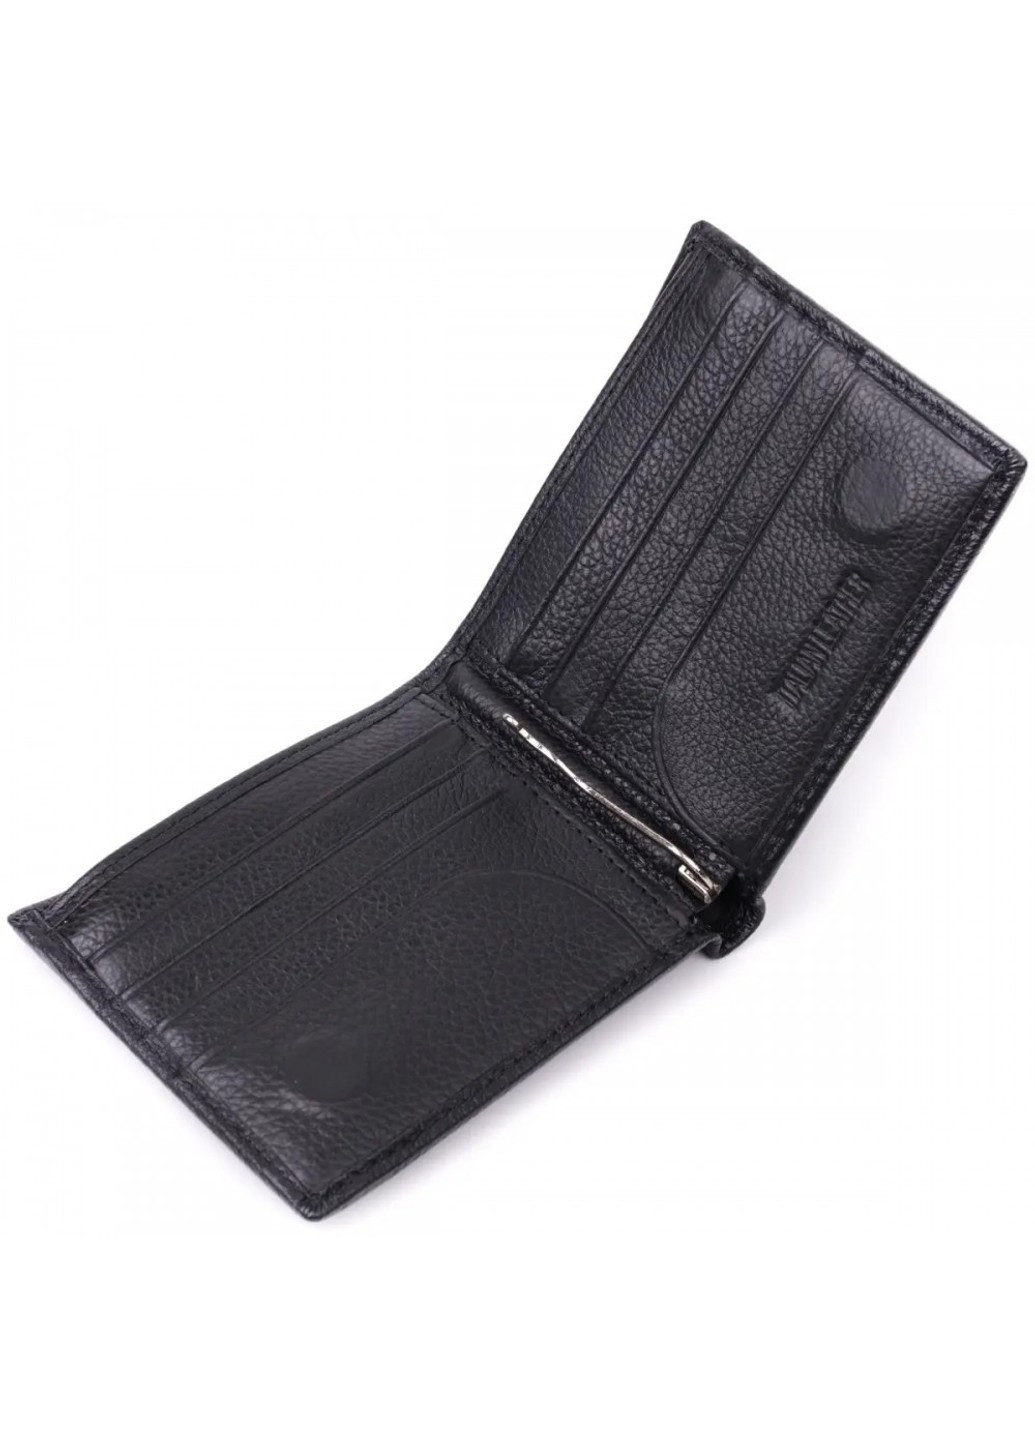 Мужской кожаный кошелек-зажим ST Leather 22481 ST Leather Accessories (277925862)